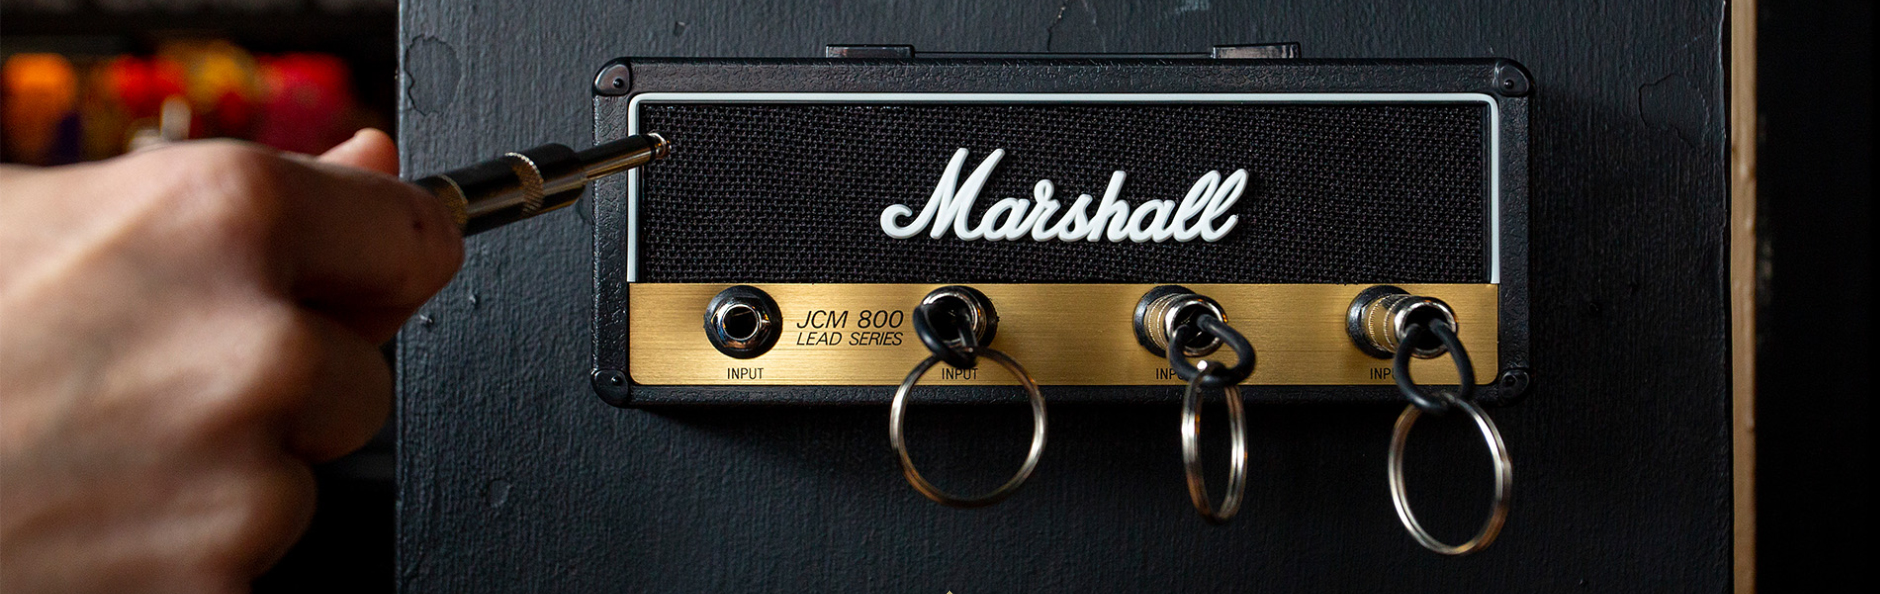 Marshall Jack Rack Ii Jcm 800 Silver Jubilee - Key ring pendant - Variation 3